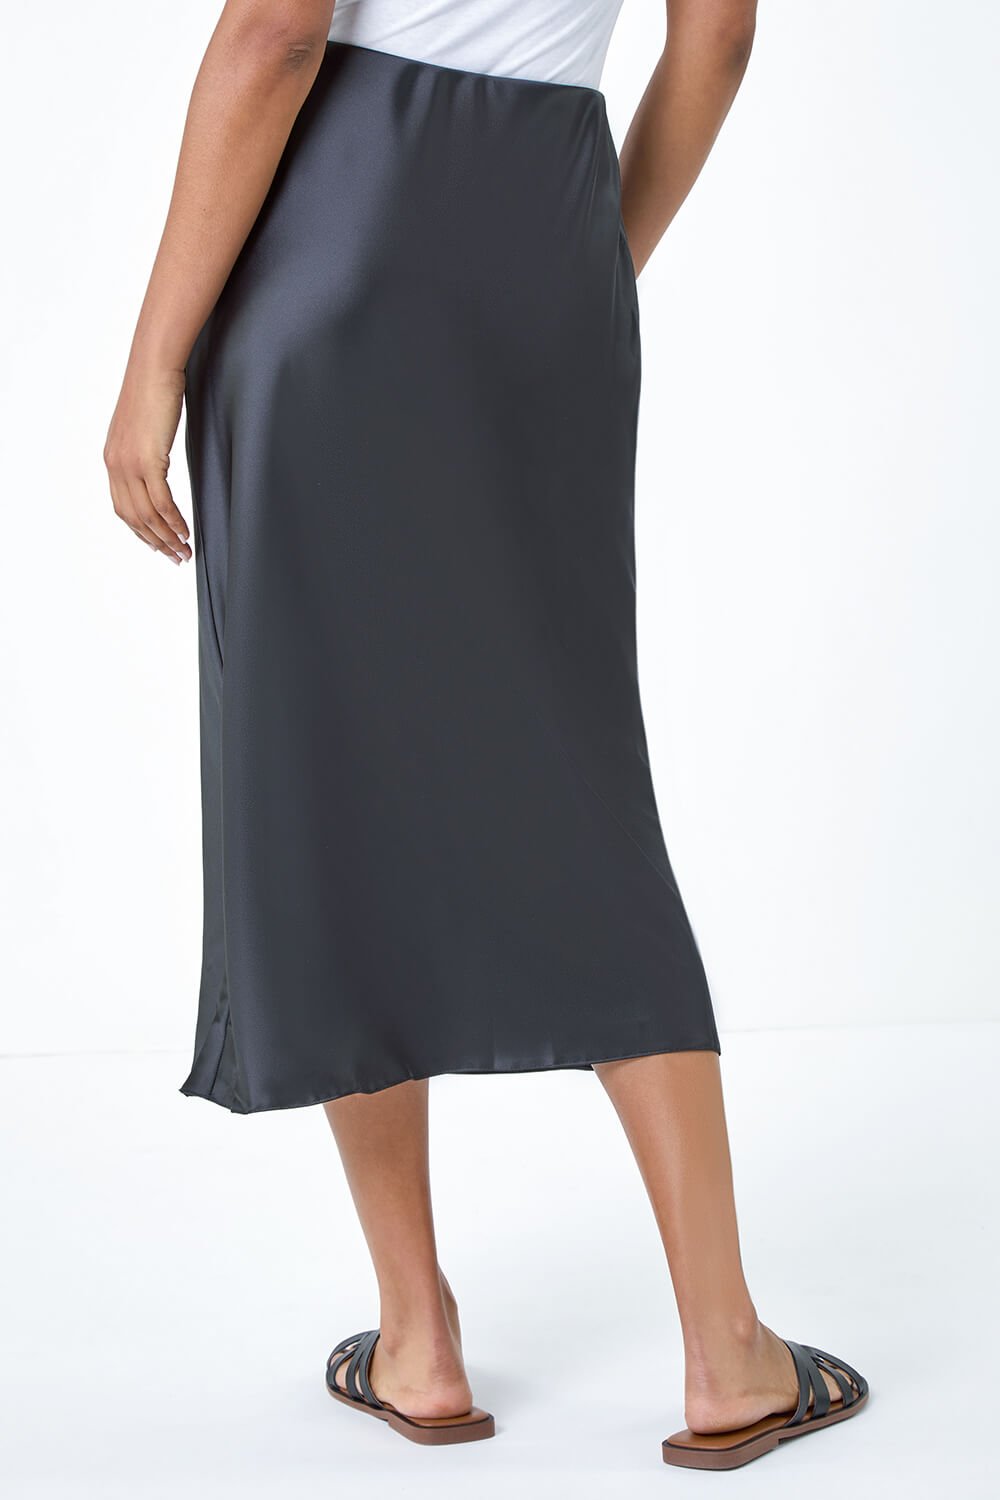 Black Satin Bias Cut Midi Skirt, Image 3 of 5